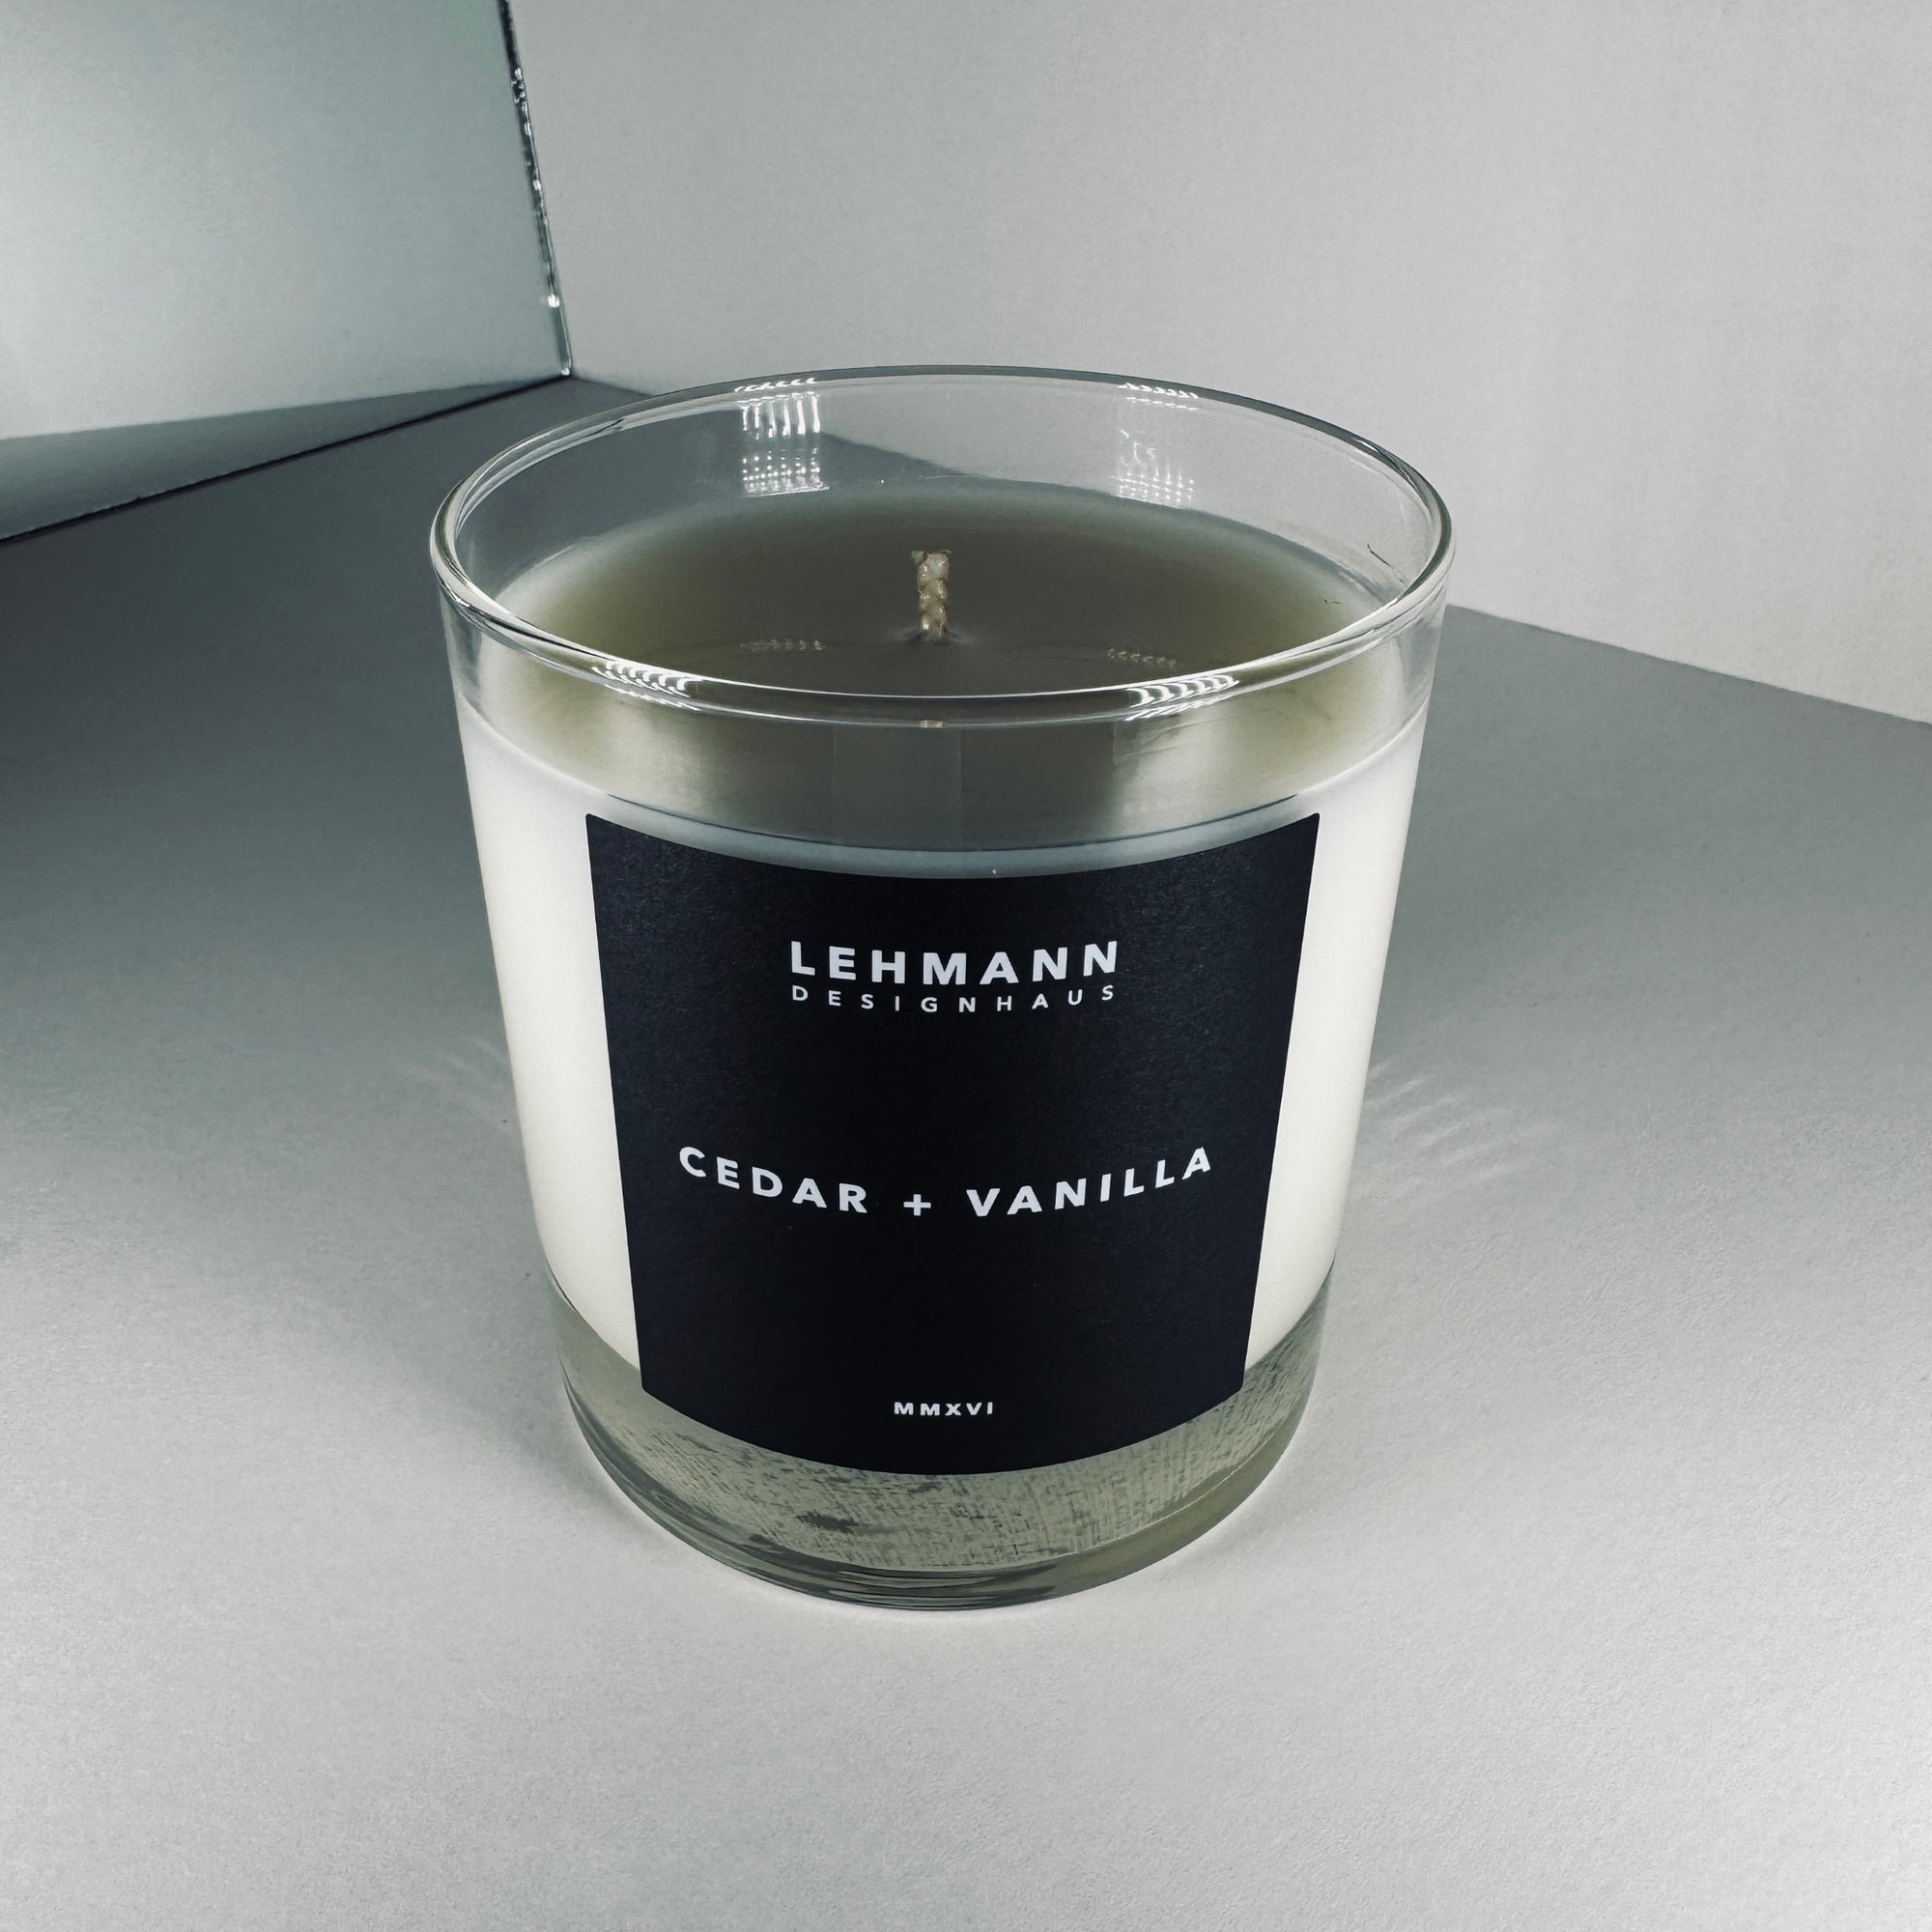 Cedar + Vanilla 227g Candle LEHMANN DESIGN HAUS